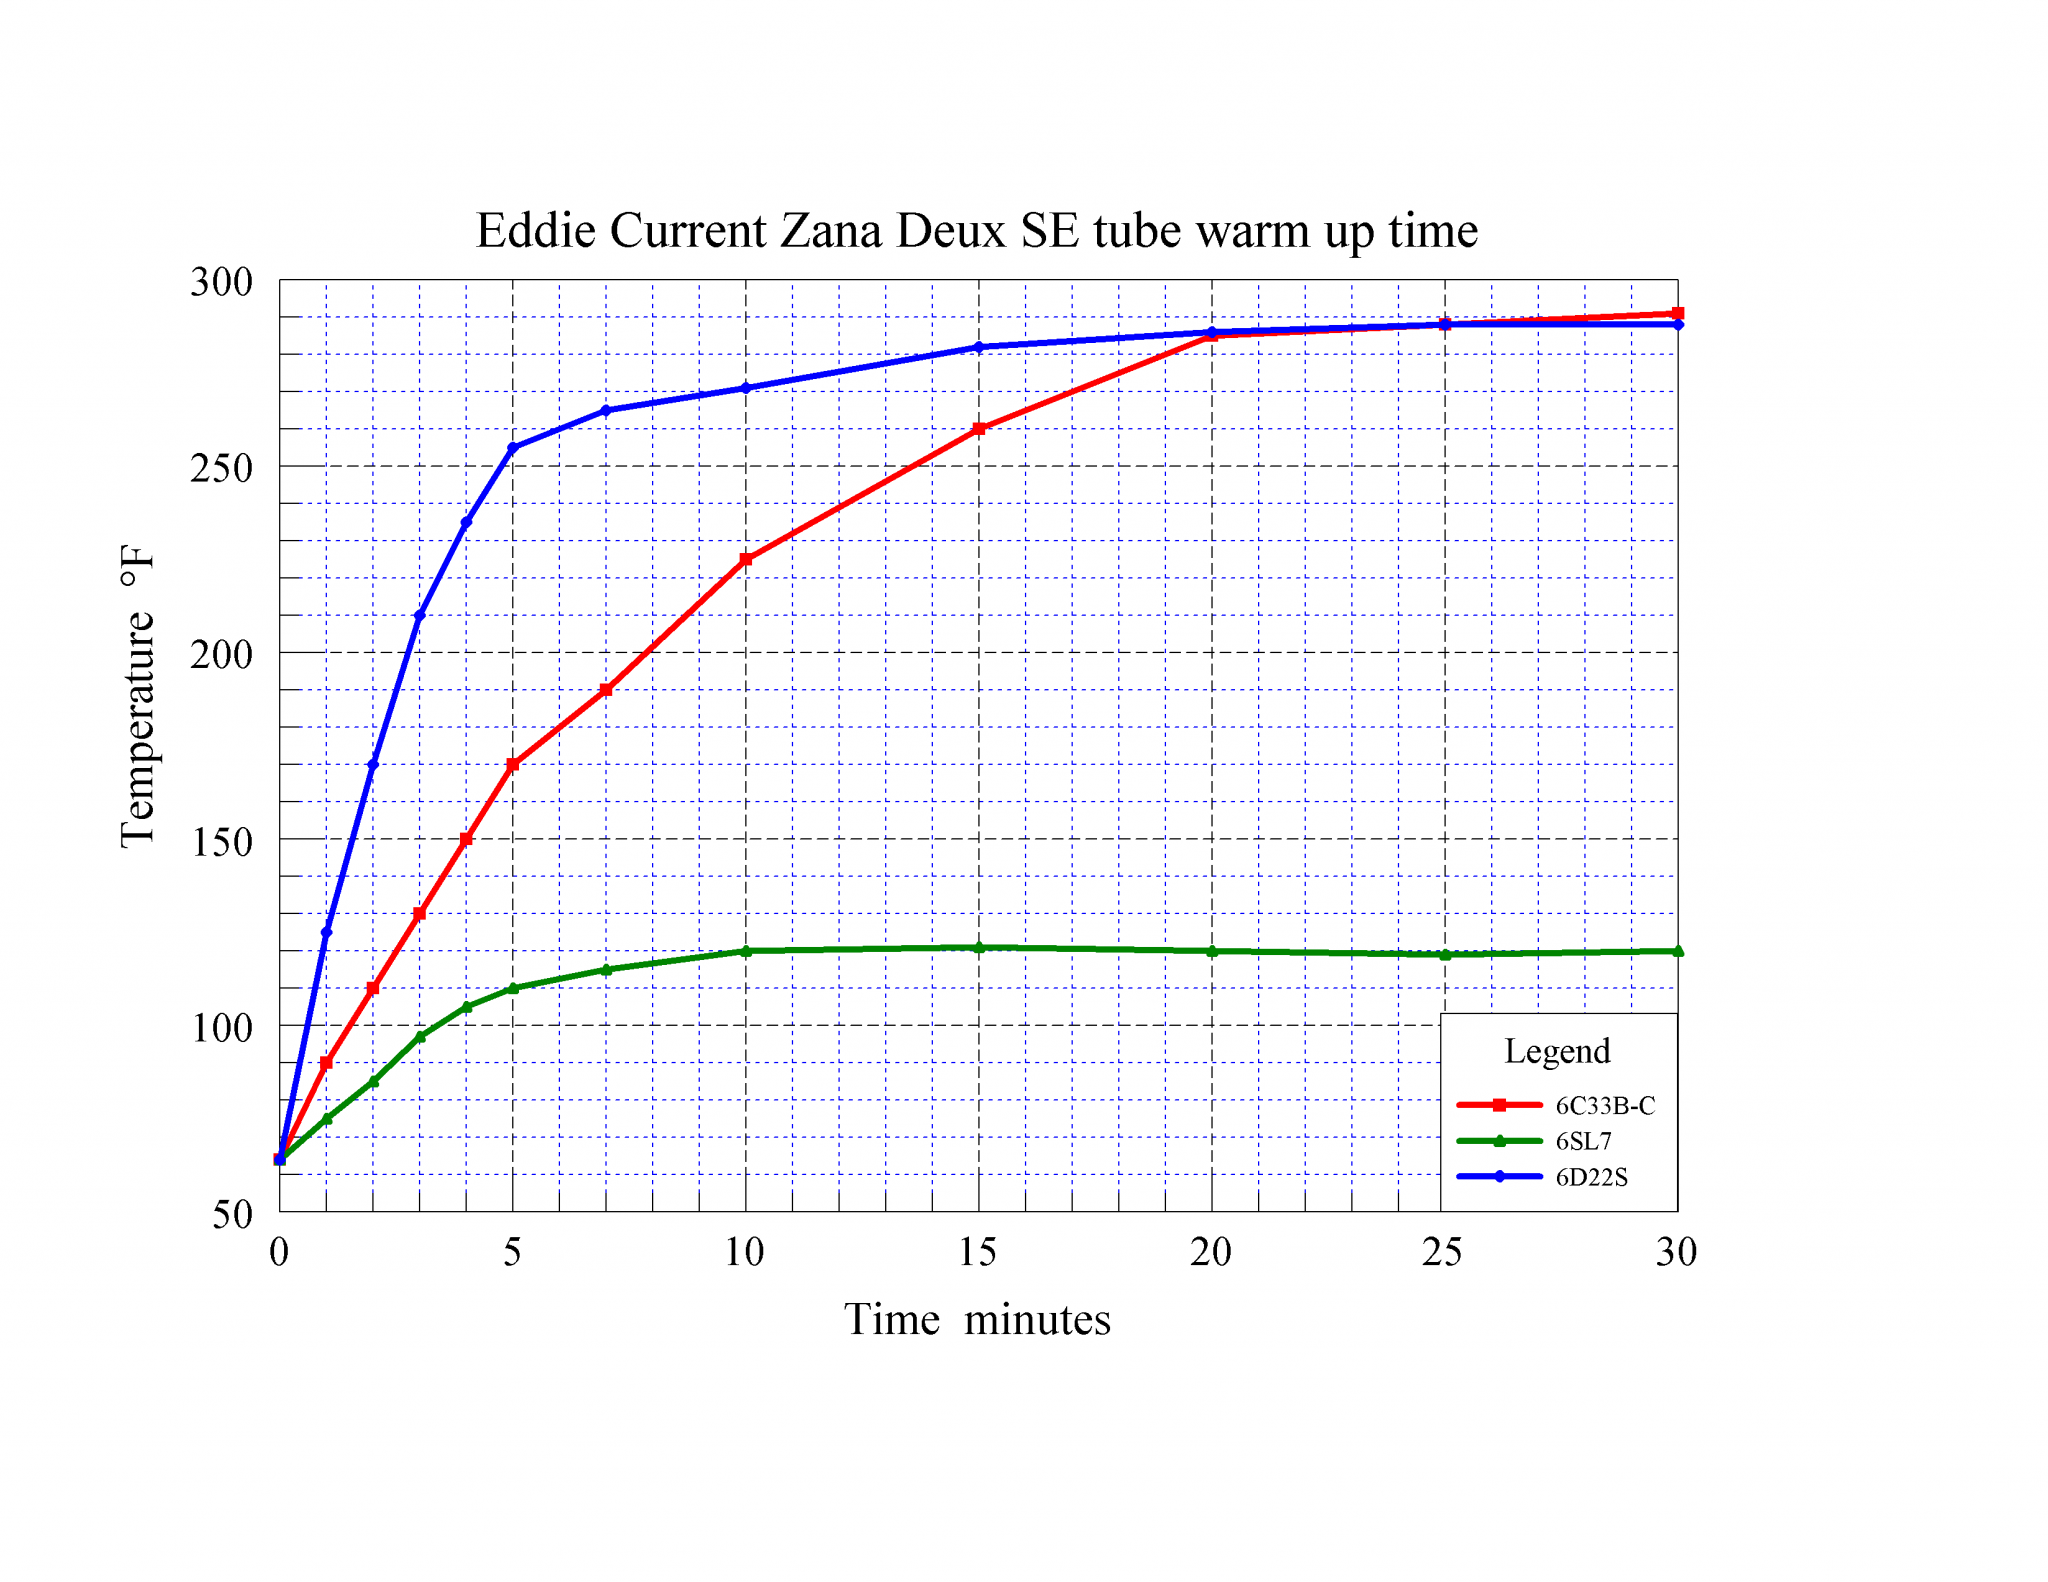 EC ZDSE  6C33B-C  6SL7  6D22S warm up time.png